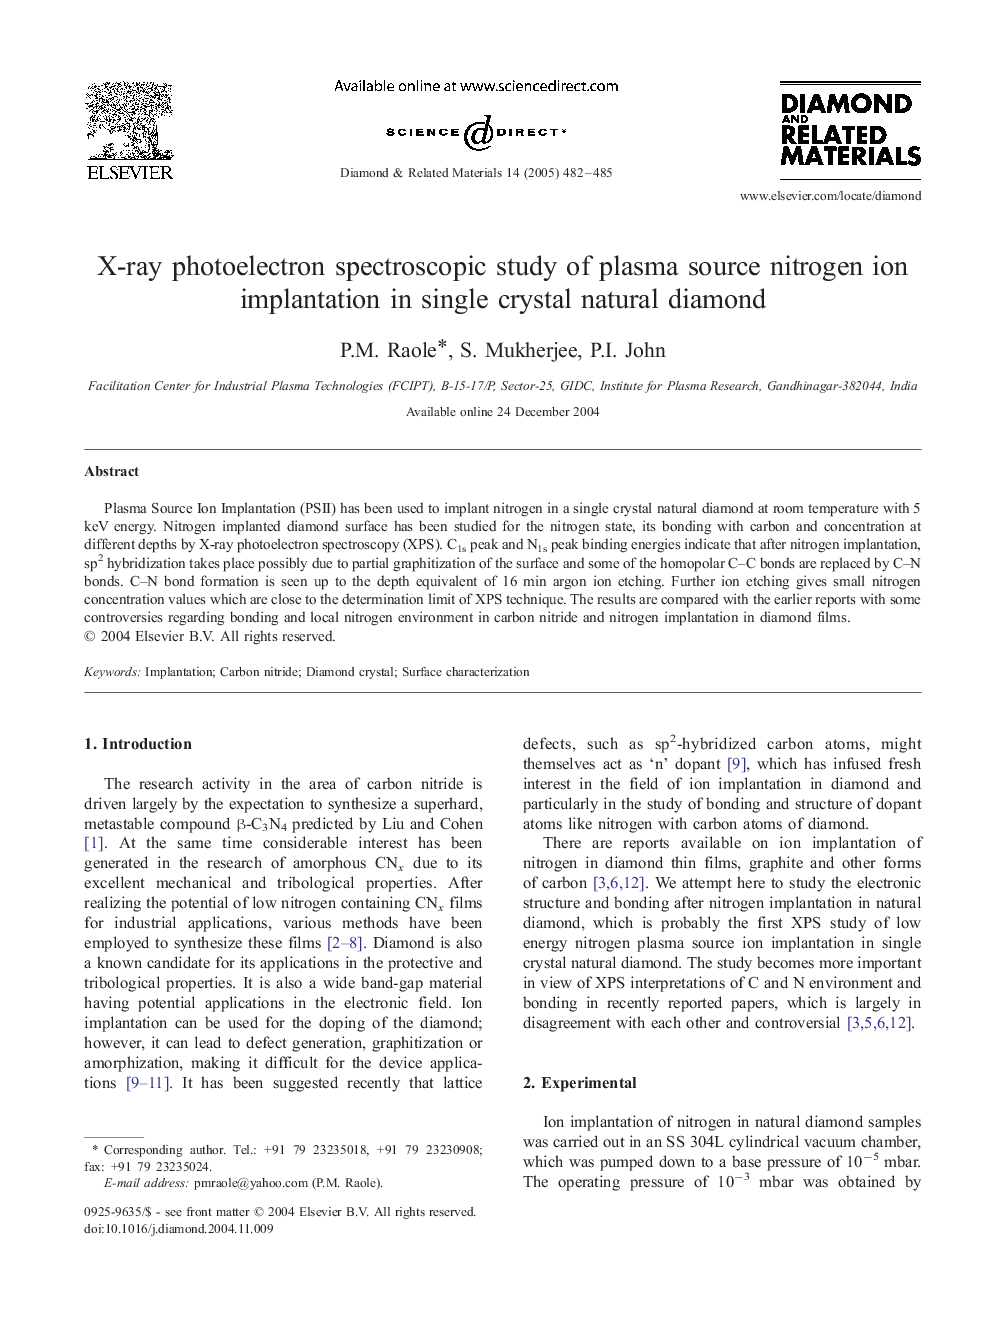 X-ray photoelectron spectroscopic study of plasma source nitrogen ion implantation in single crystal natural diamond